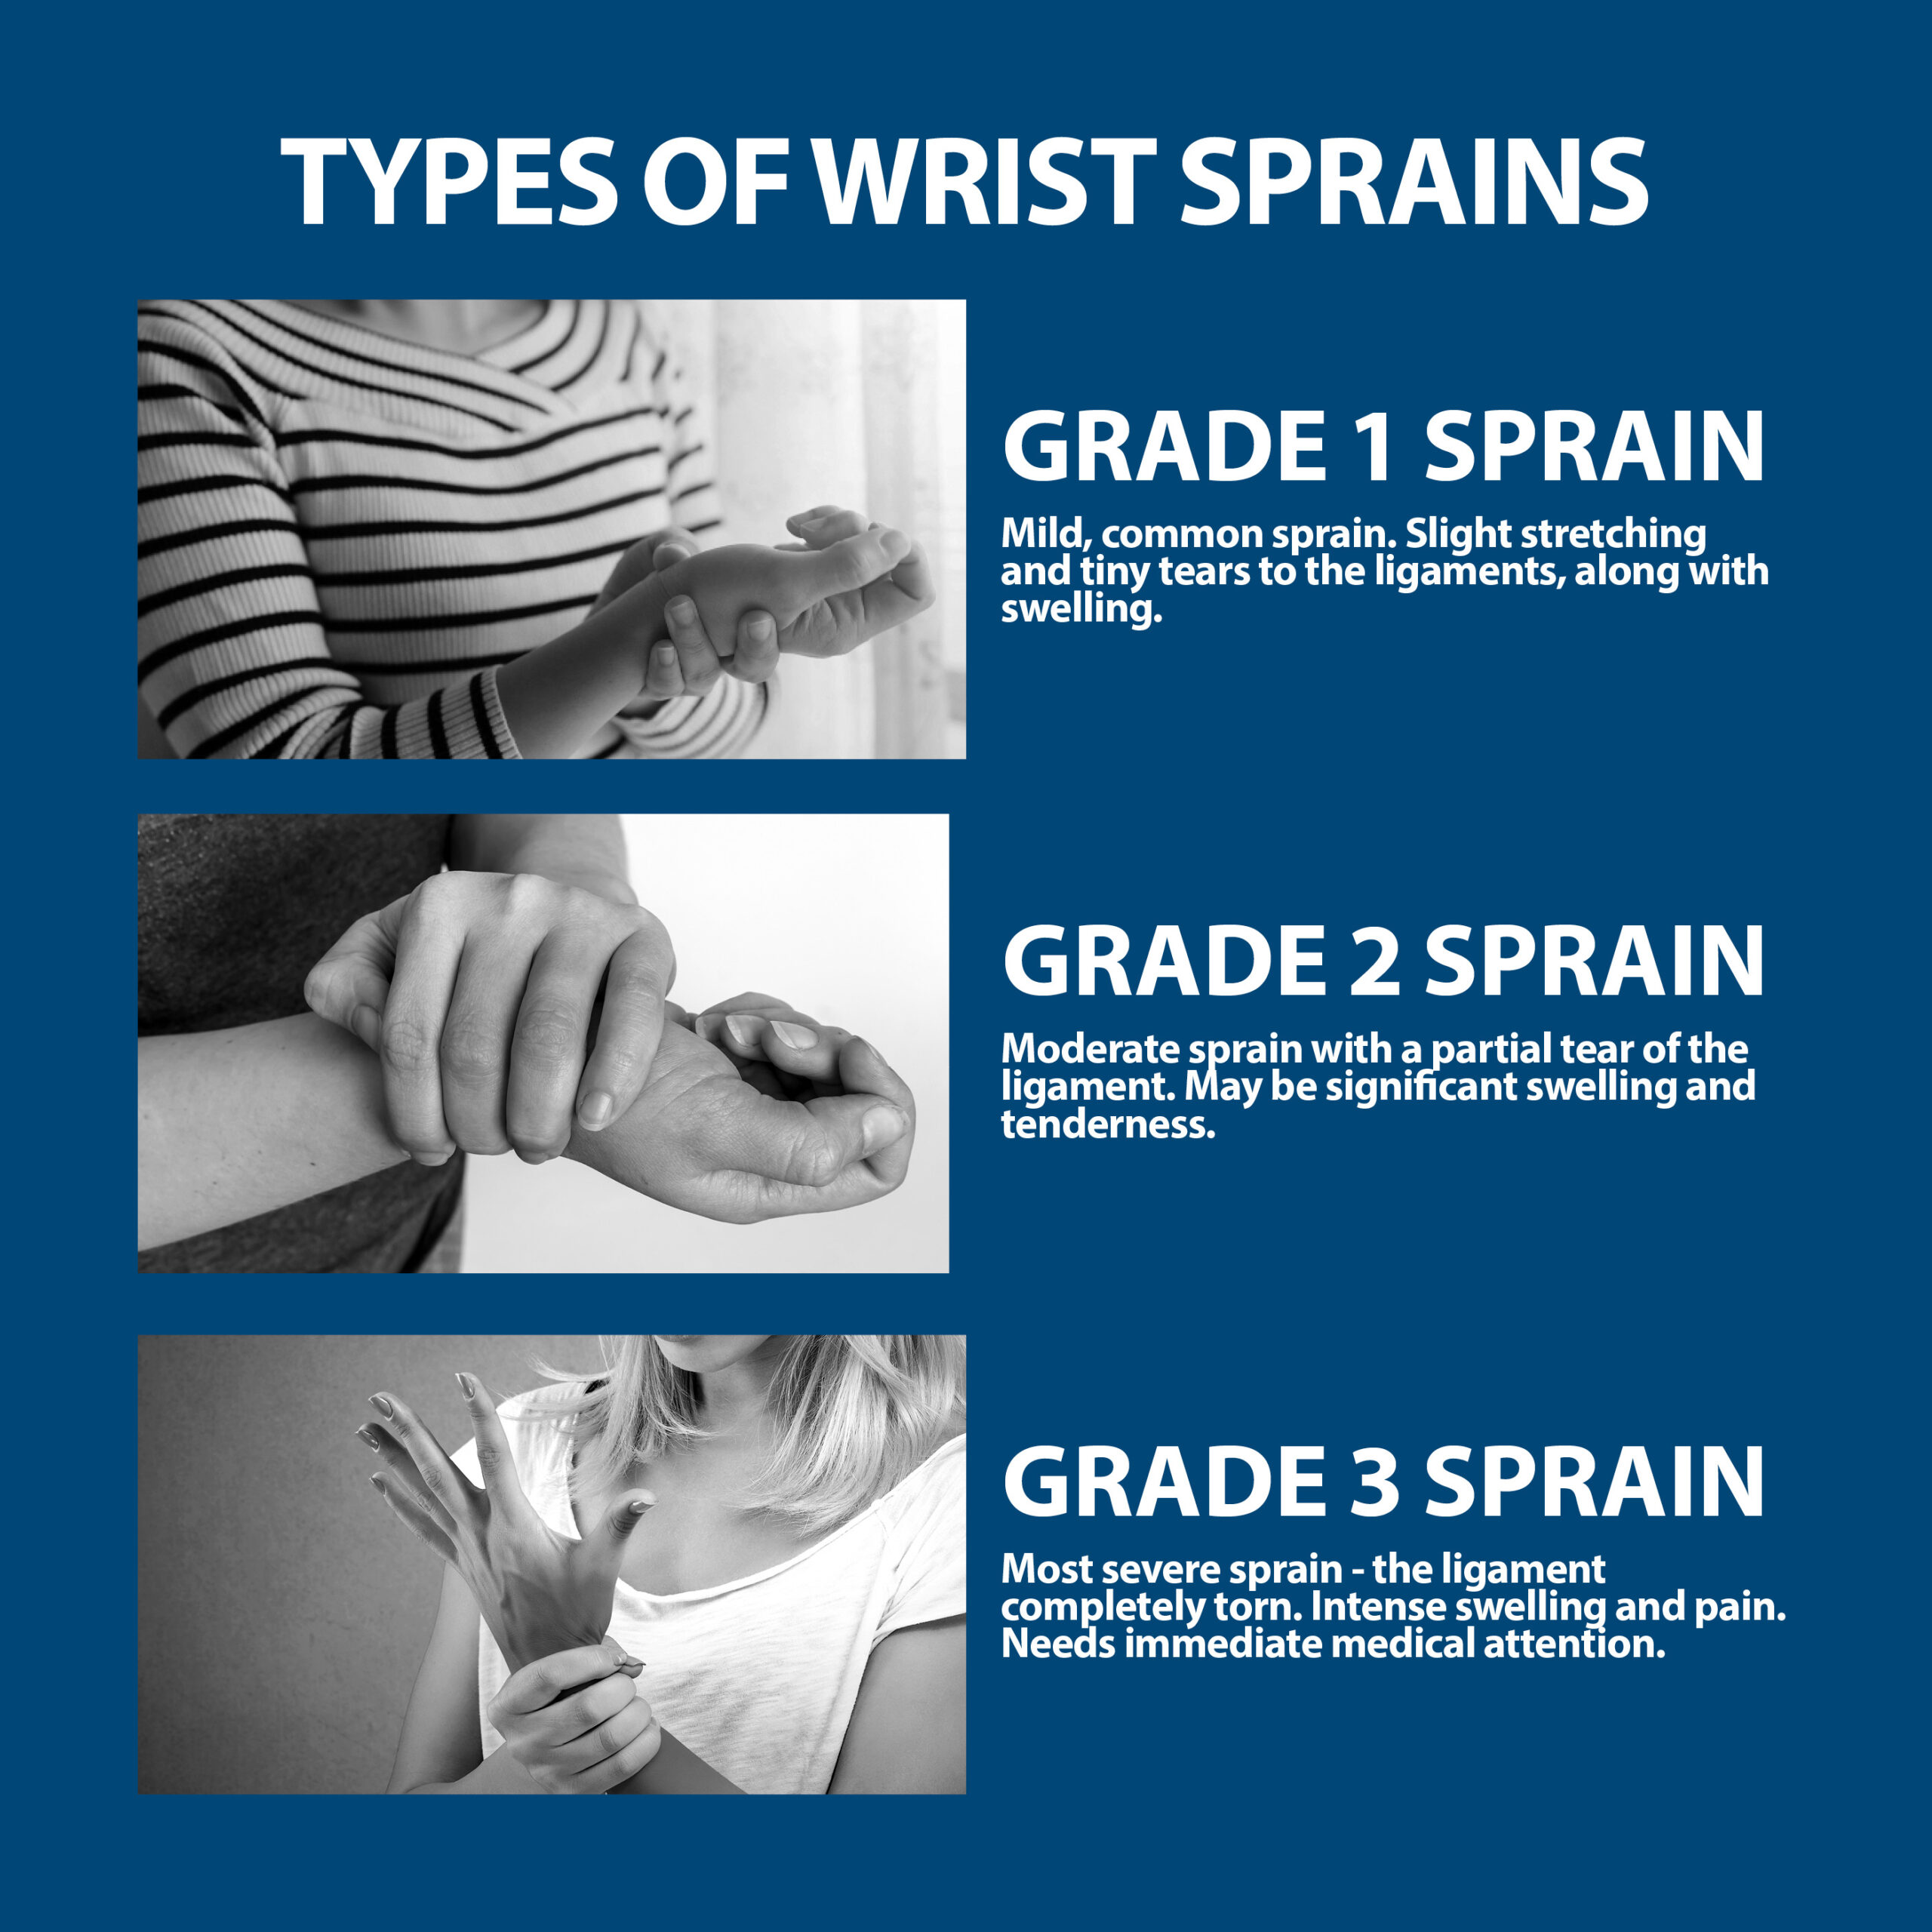 Wrist Sprains and Grades